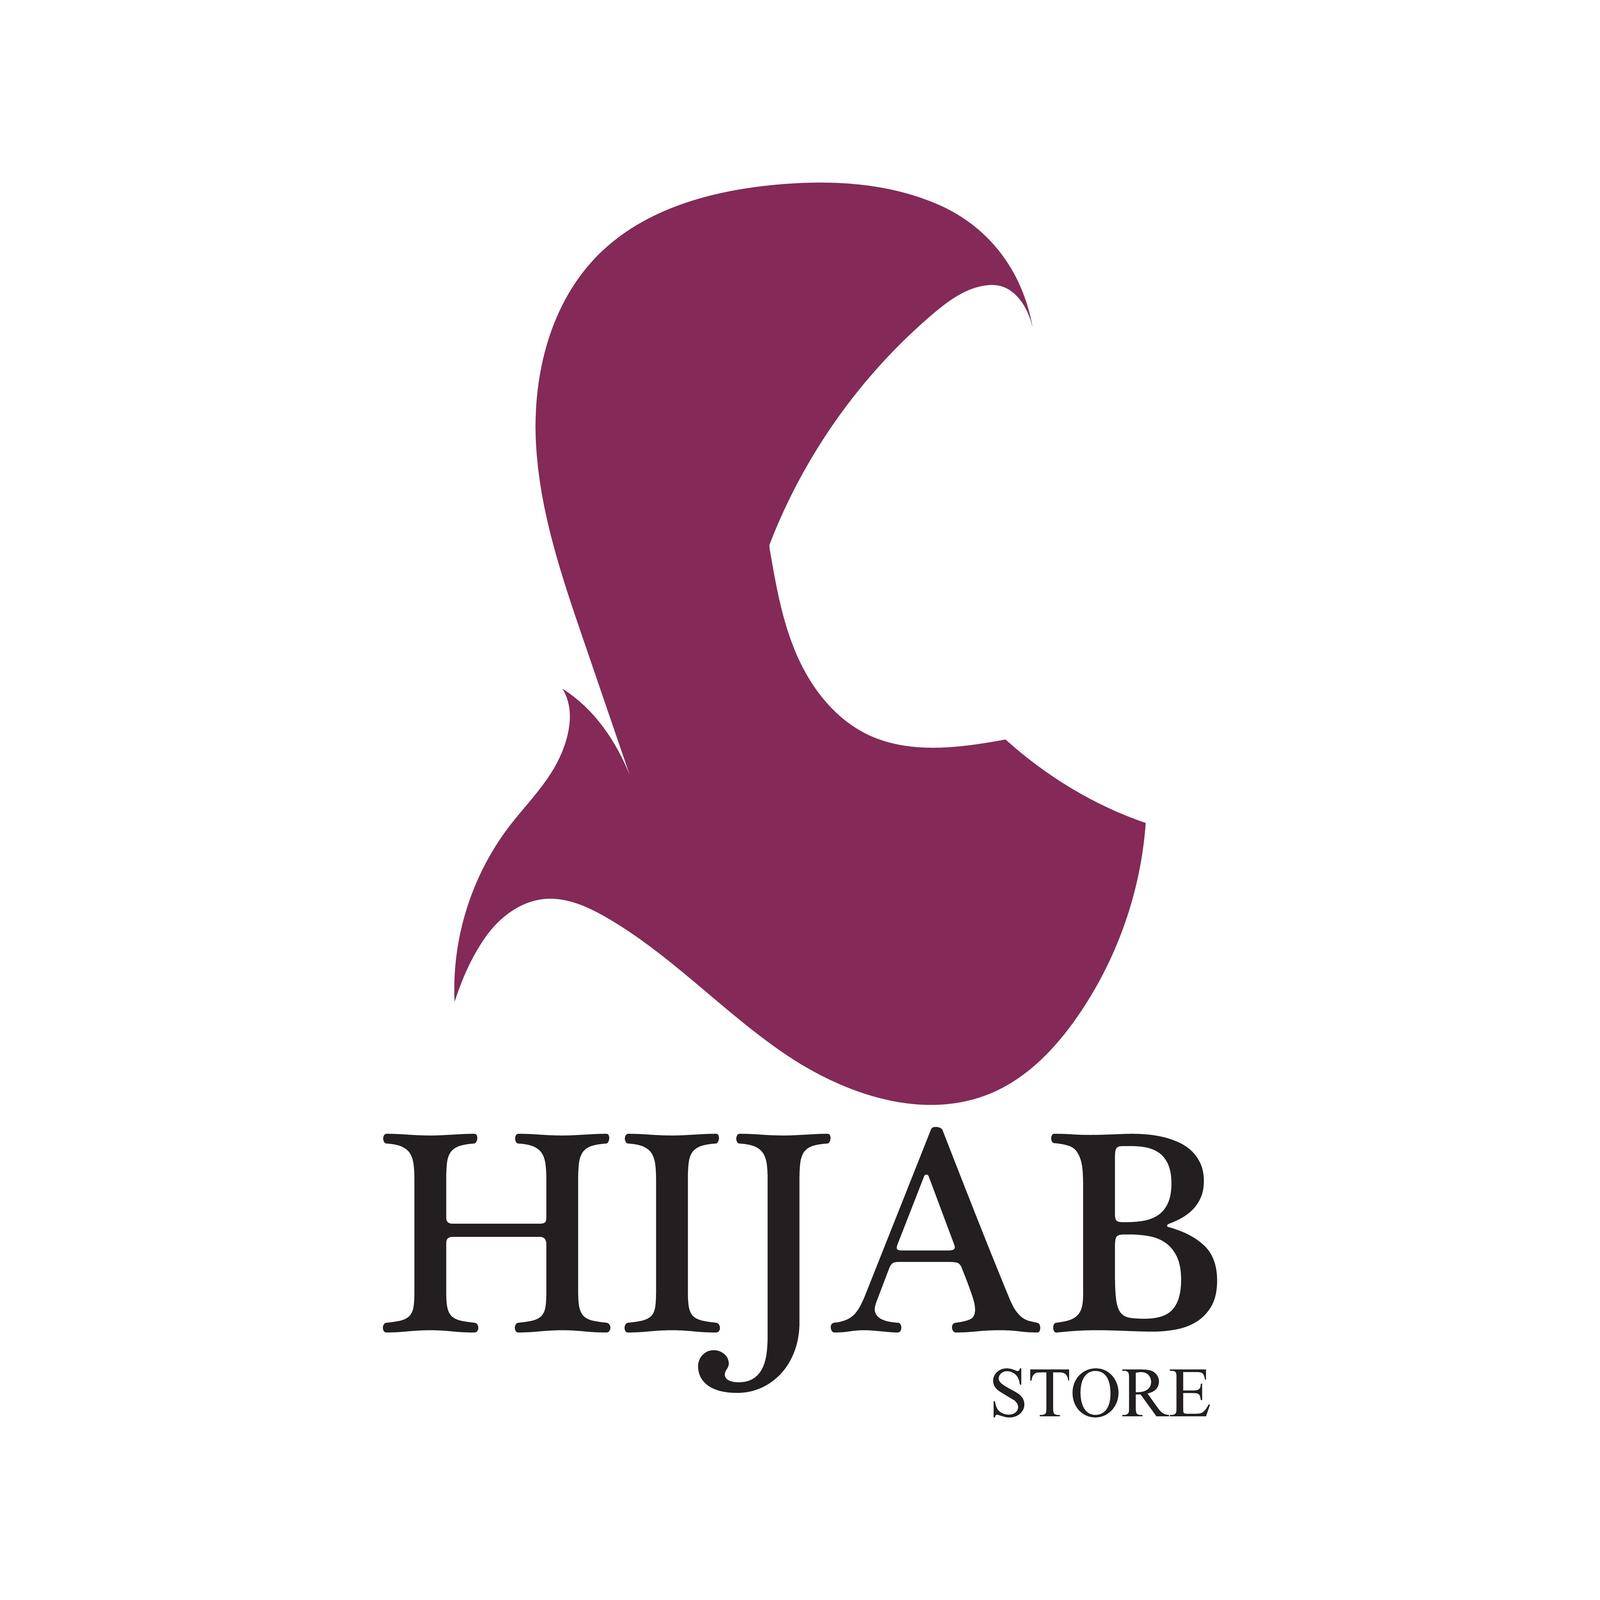 hijab logo vector icon design template by Graphicindo